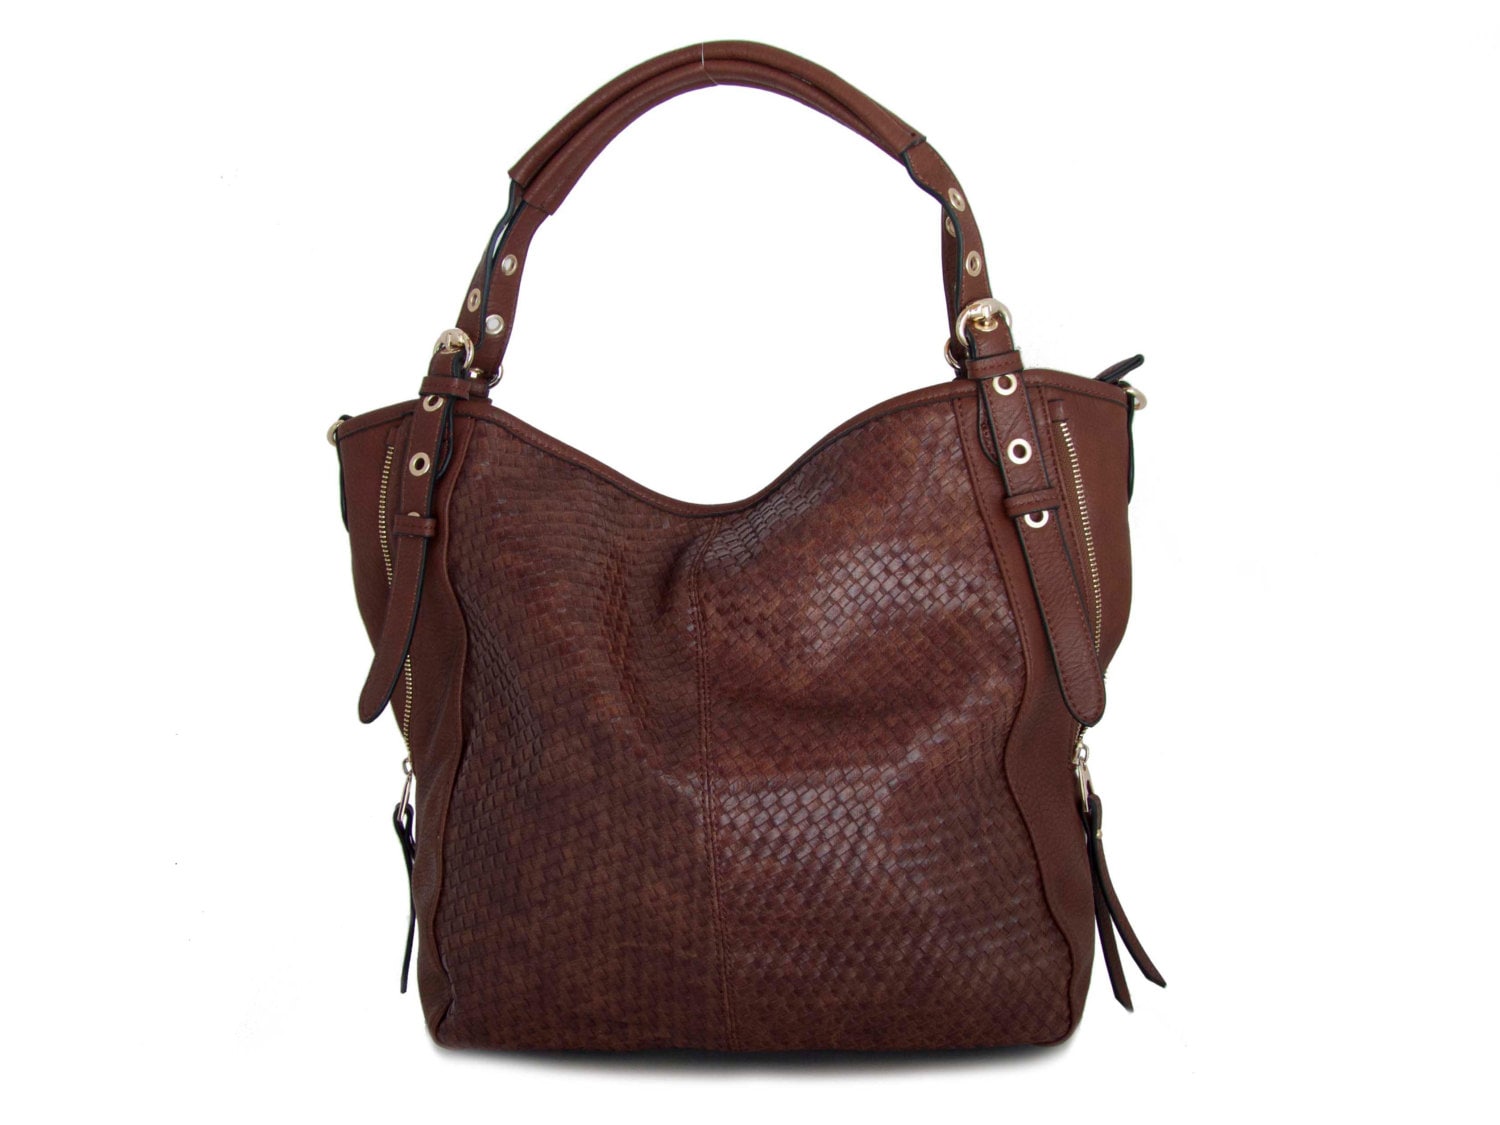 Handmade vegan leather handbag purse Brown by VeganLeatherHandbags